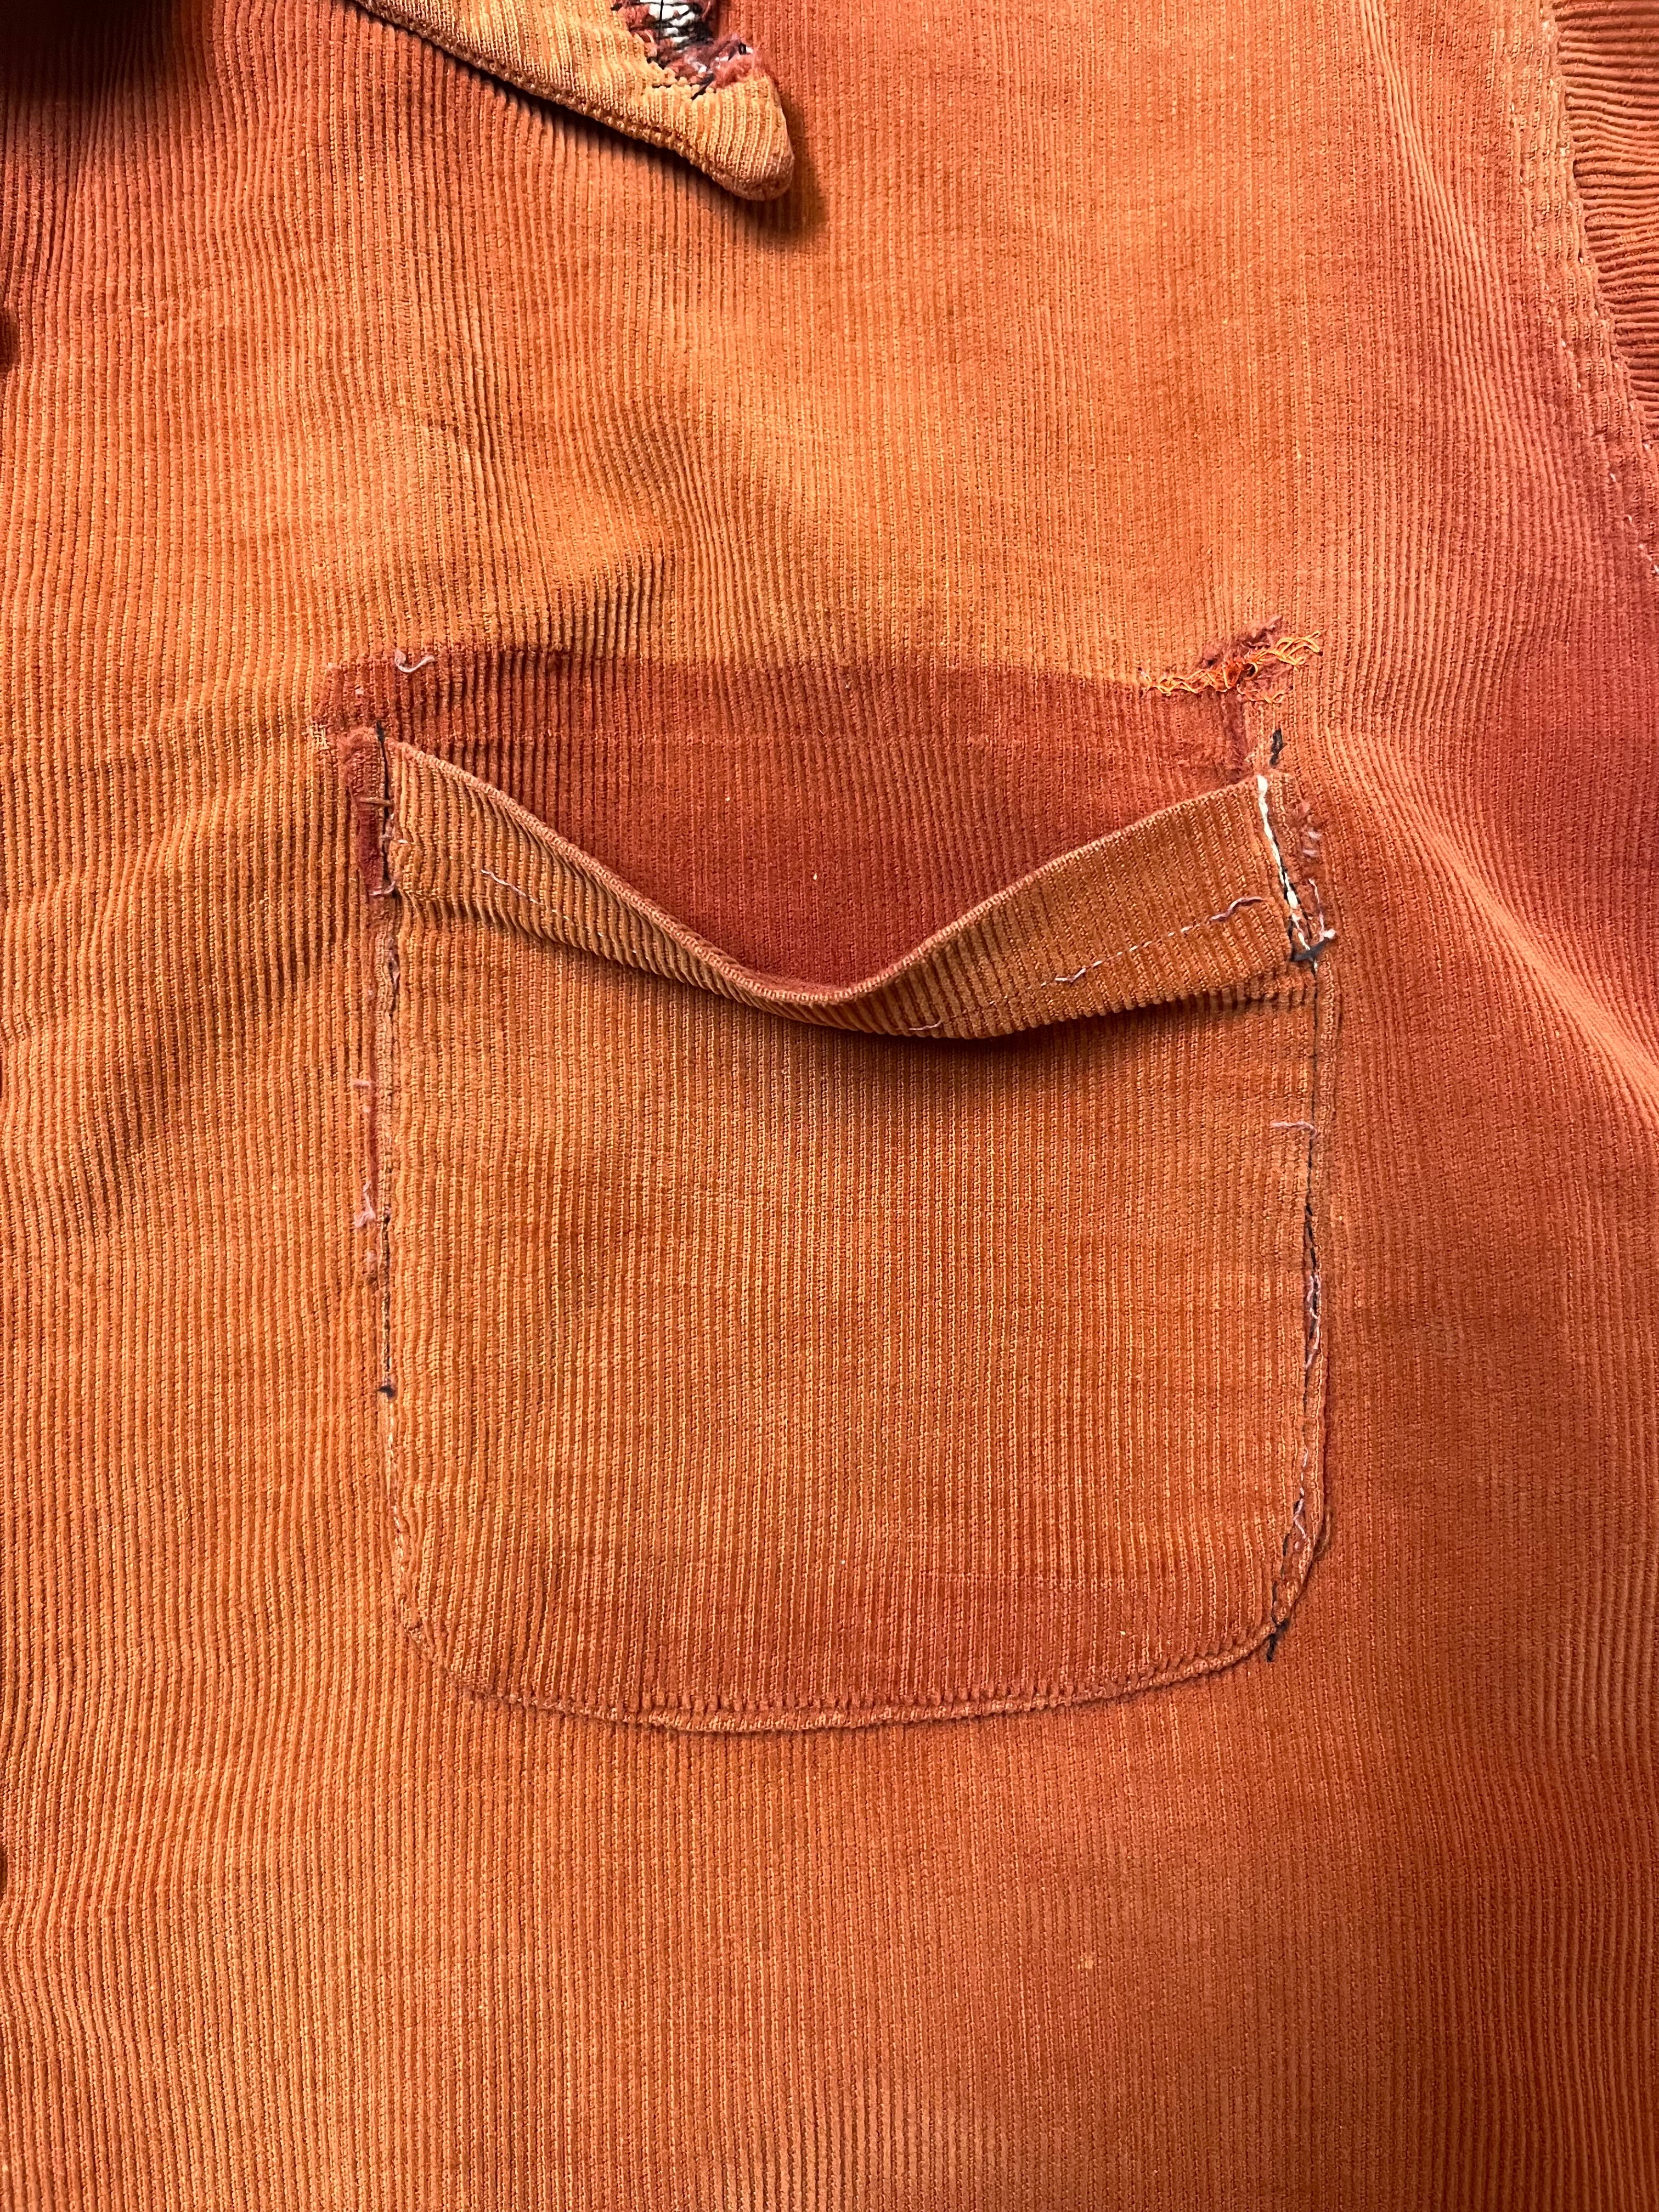 1950s Repaired Corduroy Shirt - Rust Orange - L